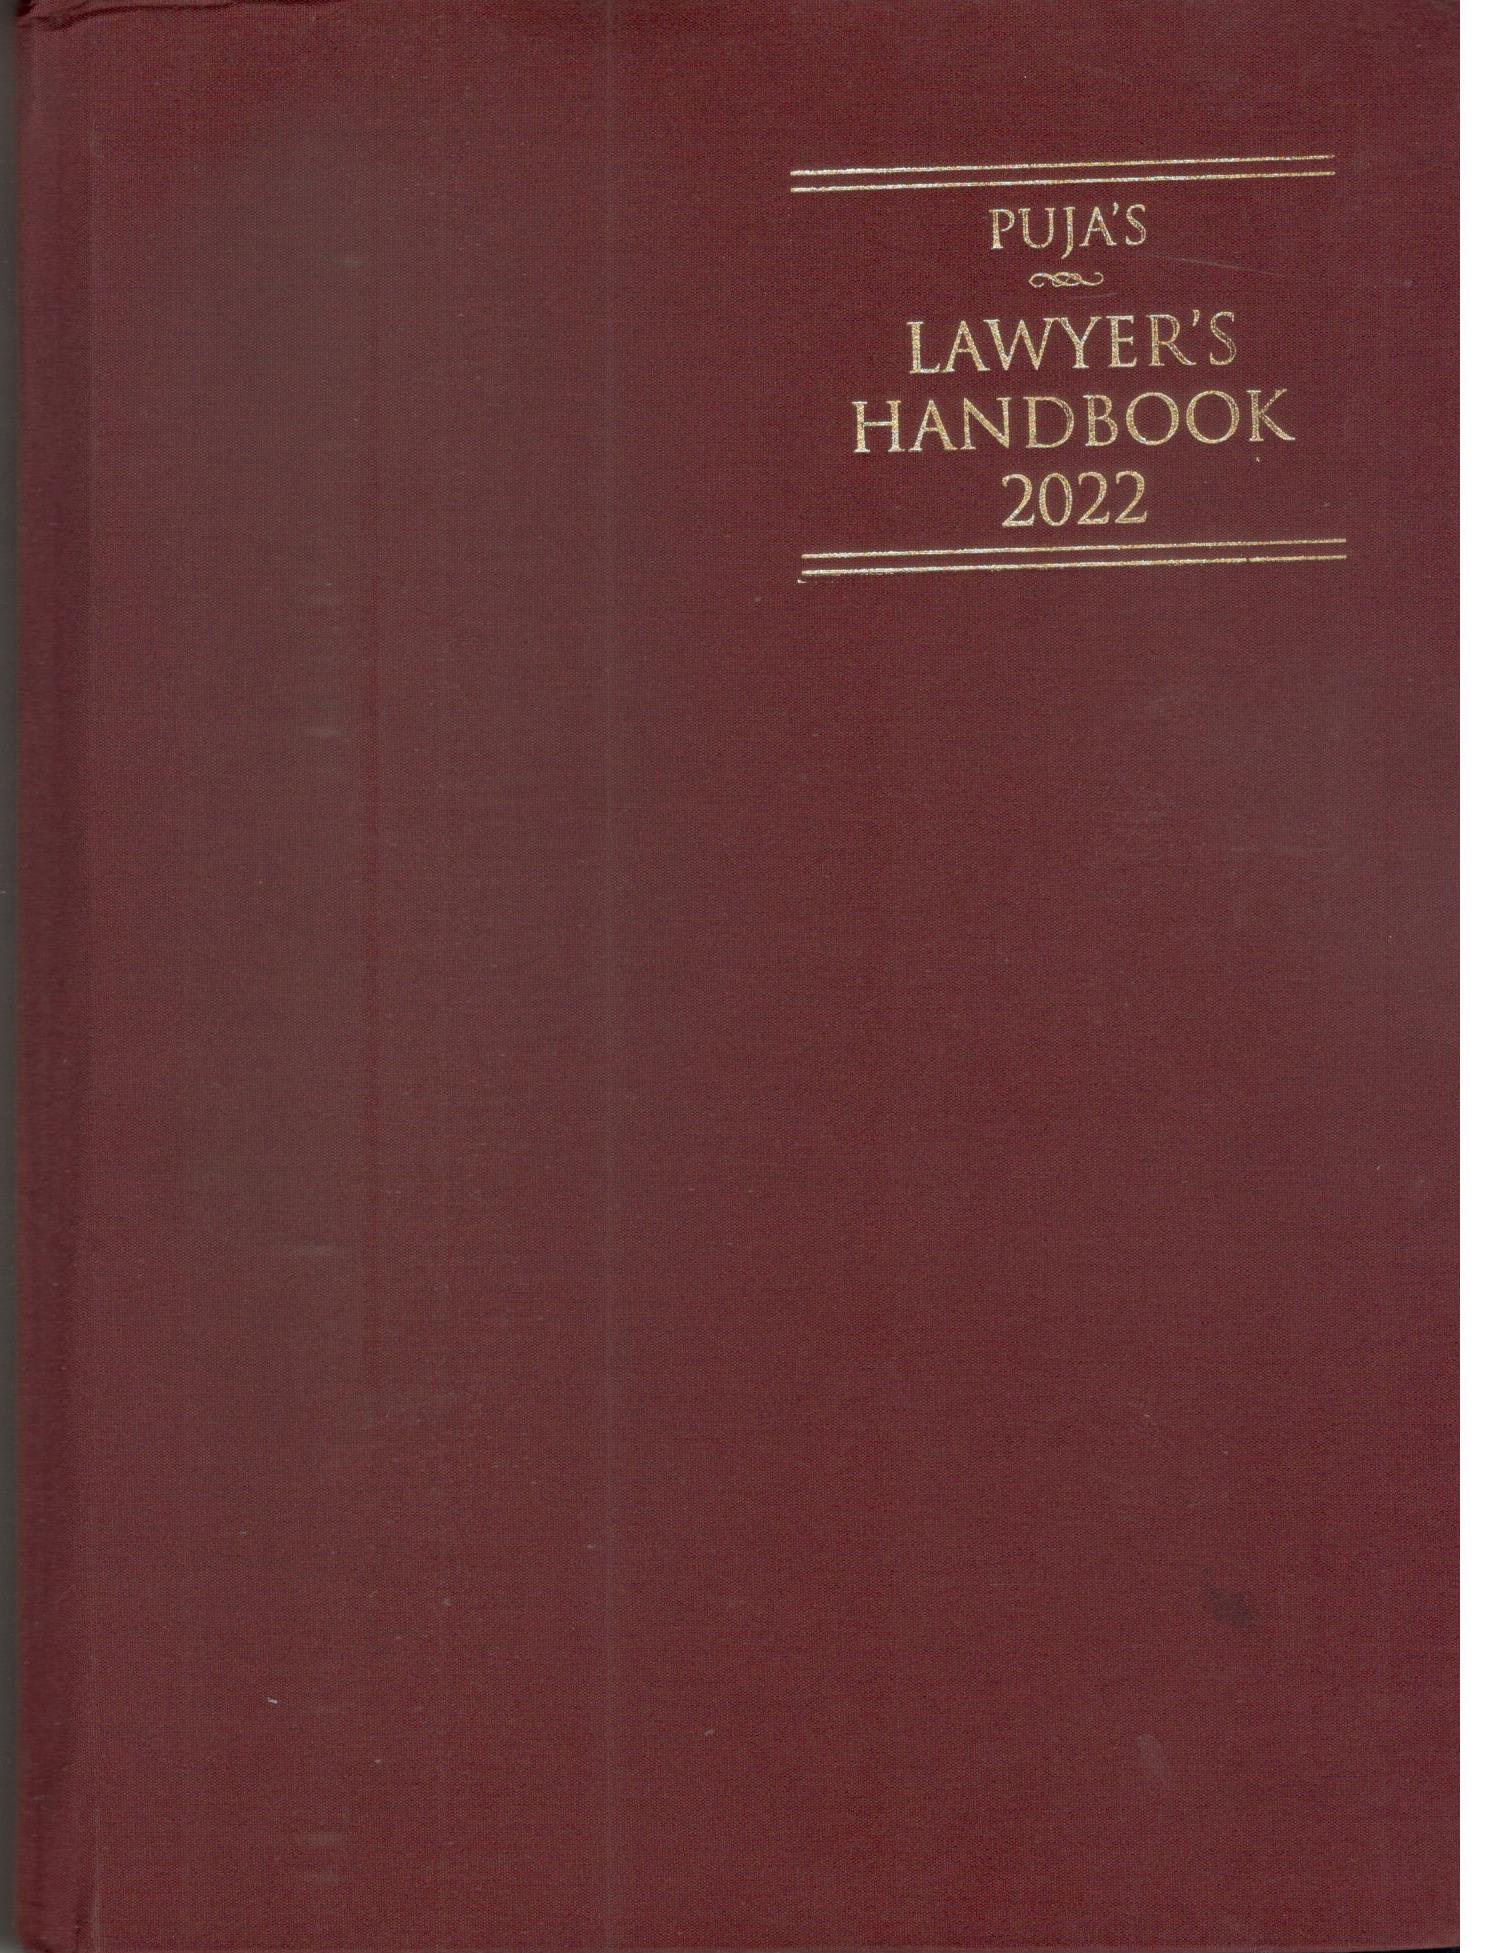 Puja’s Lawyer’s Handbook 2022 - Maroon Big Size Hardbound